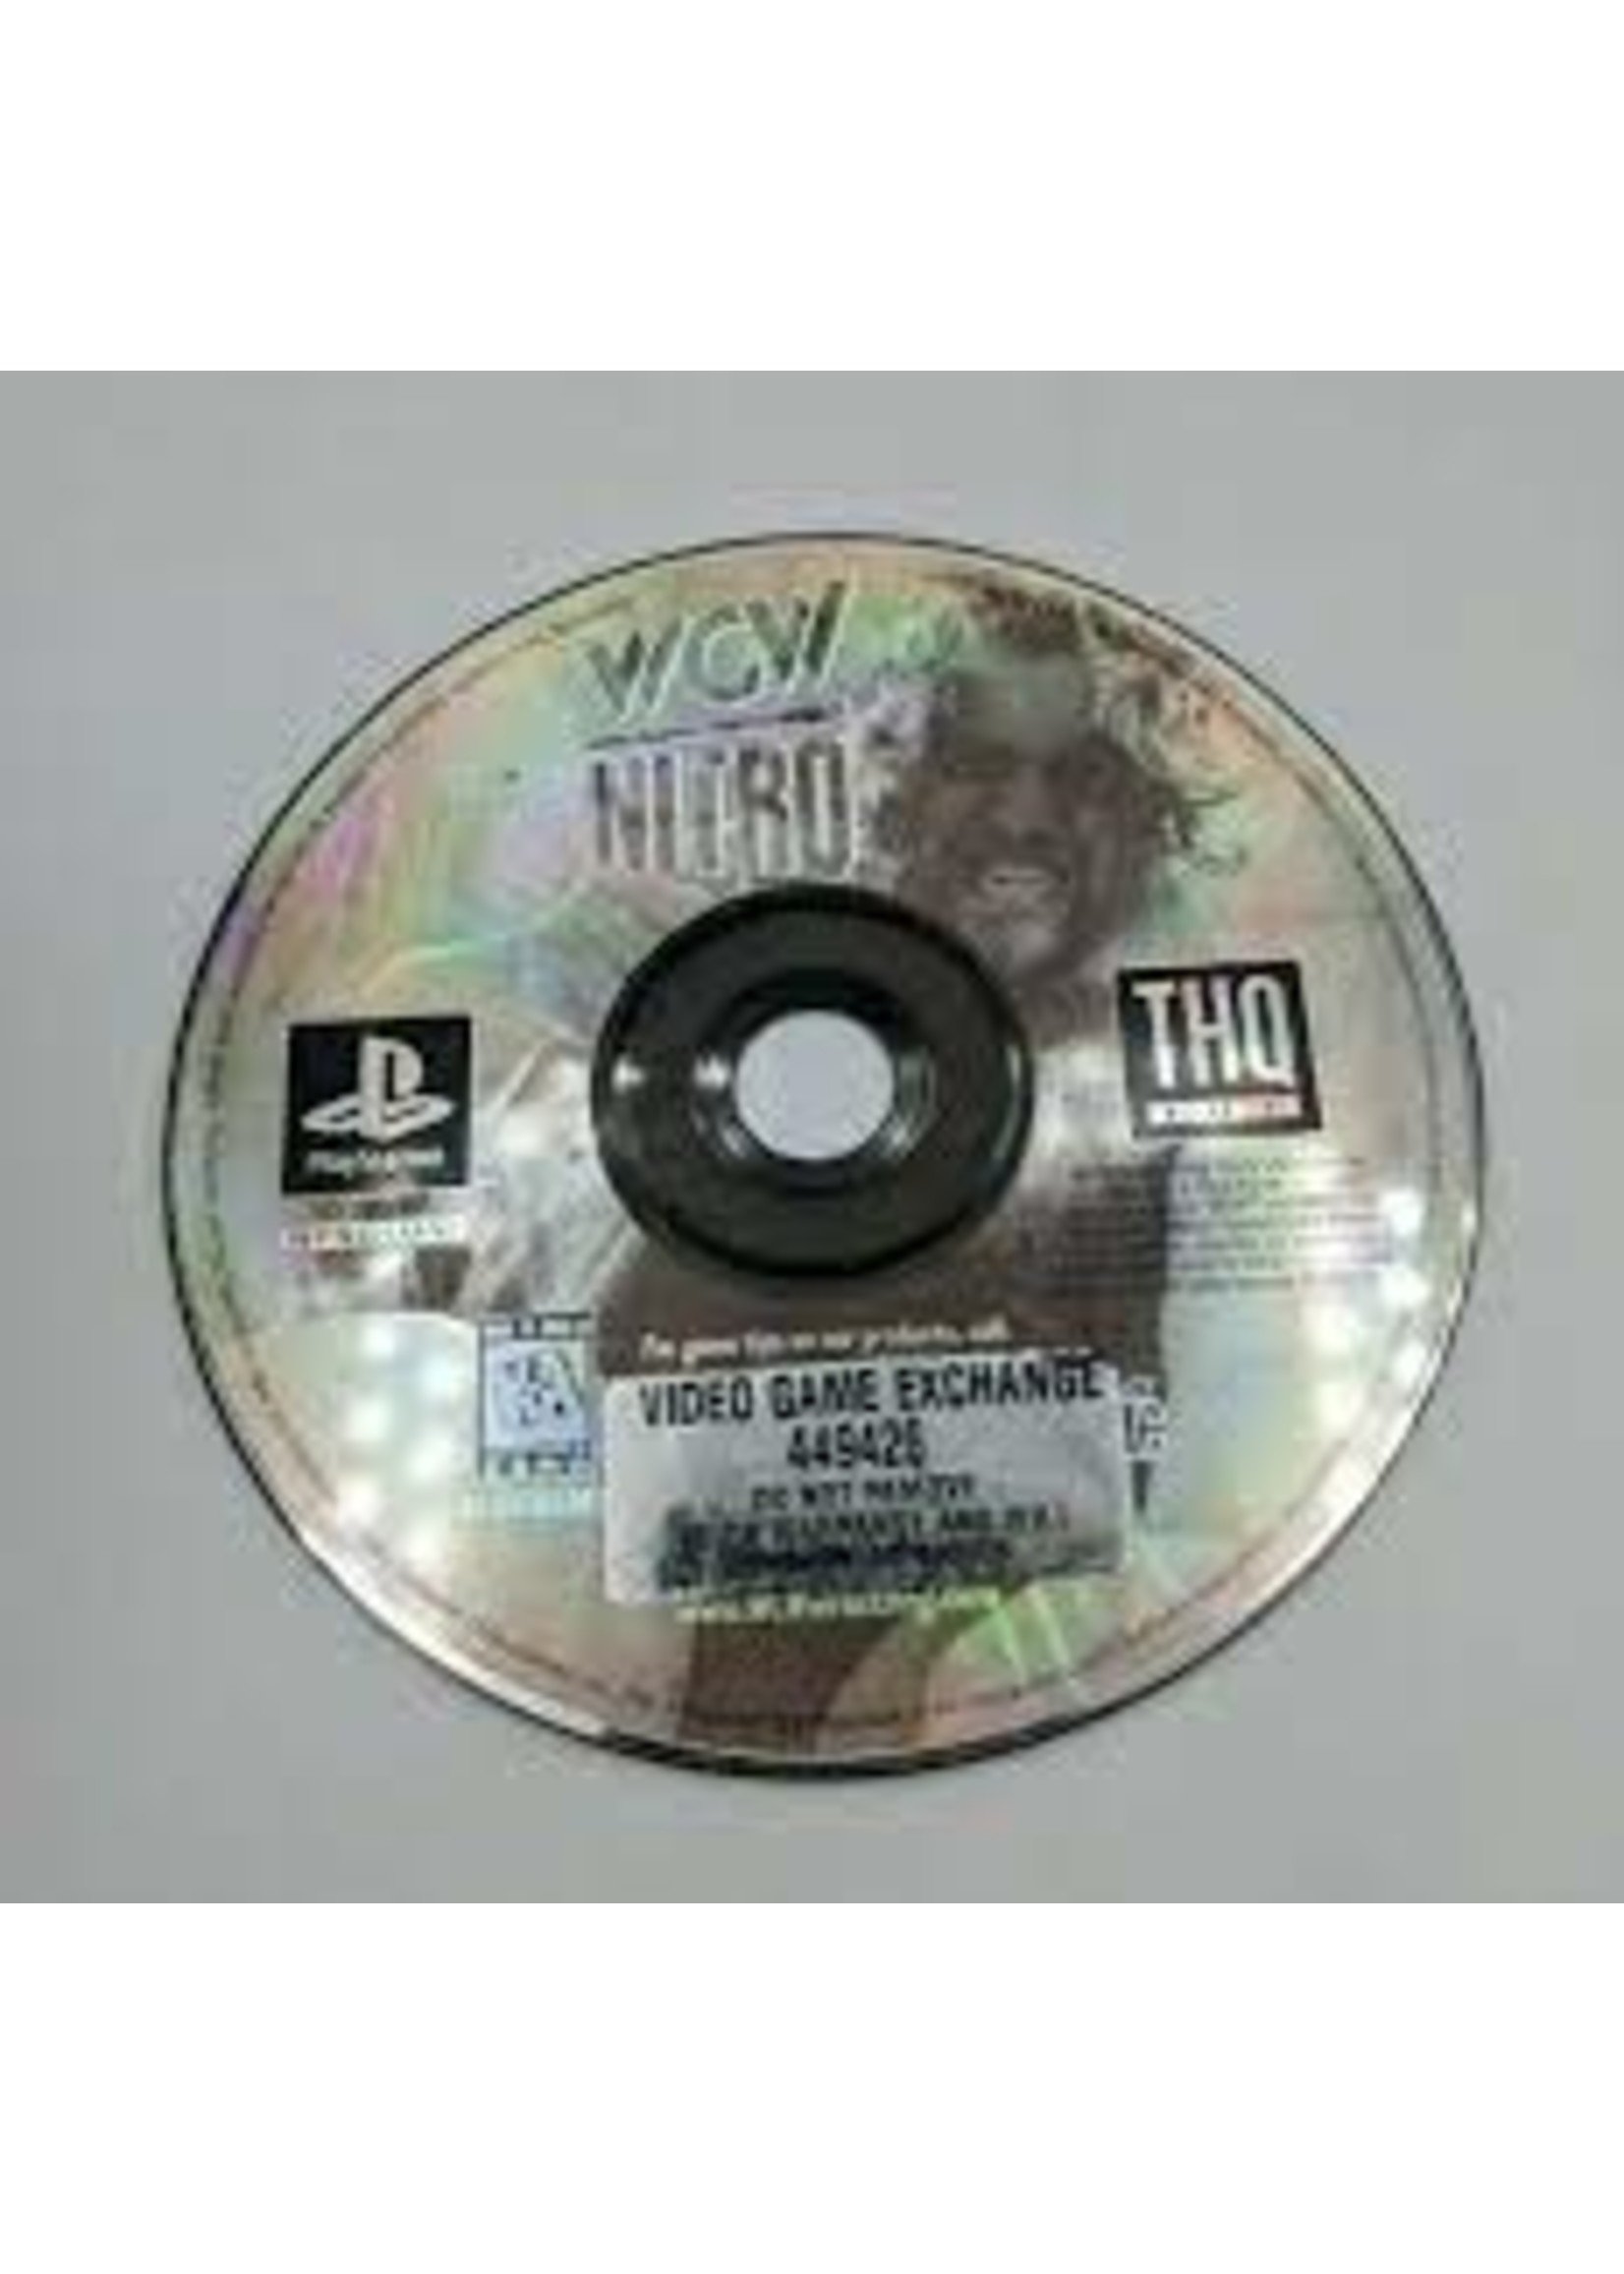 Sony Playstation 1 (PS1) WCW Nitro - Print